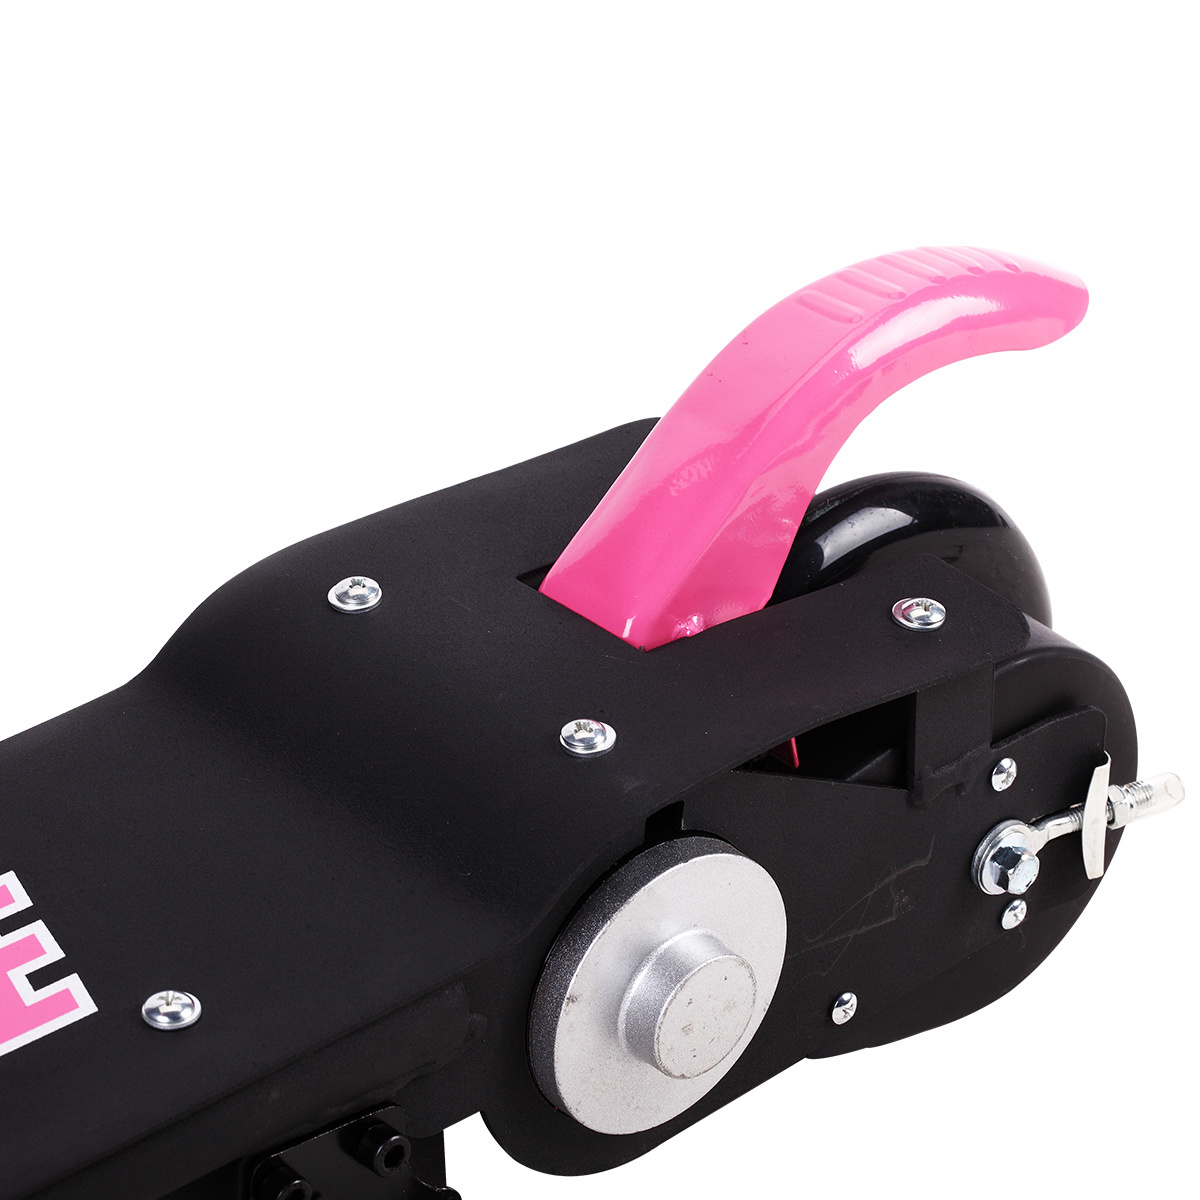 Santa Fe 170w Electric Scooter Pink Kids Ride On Toy Childrens Bike Motorbike